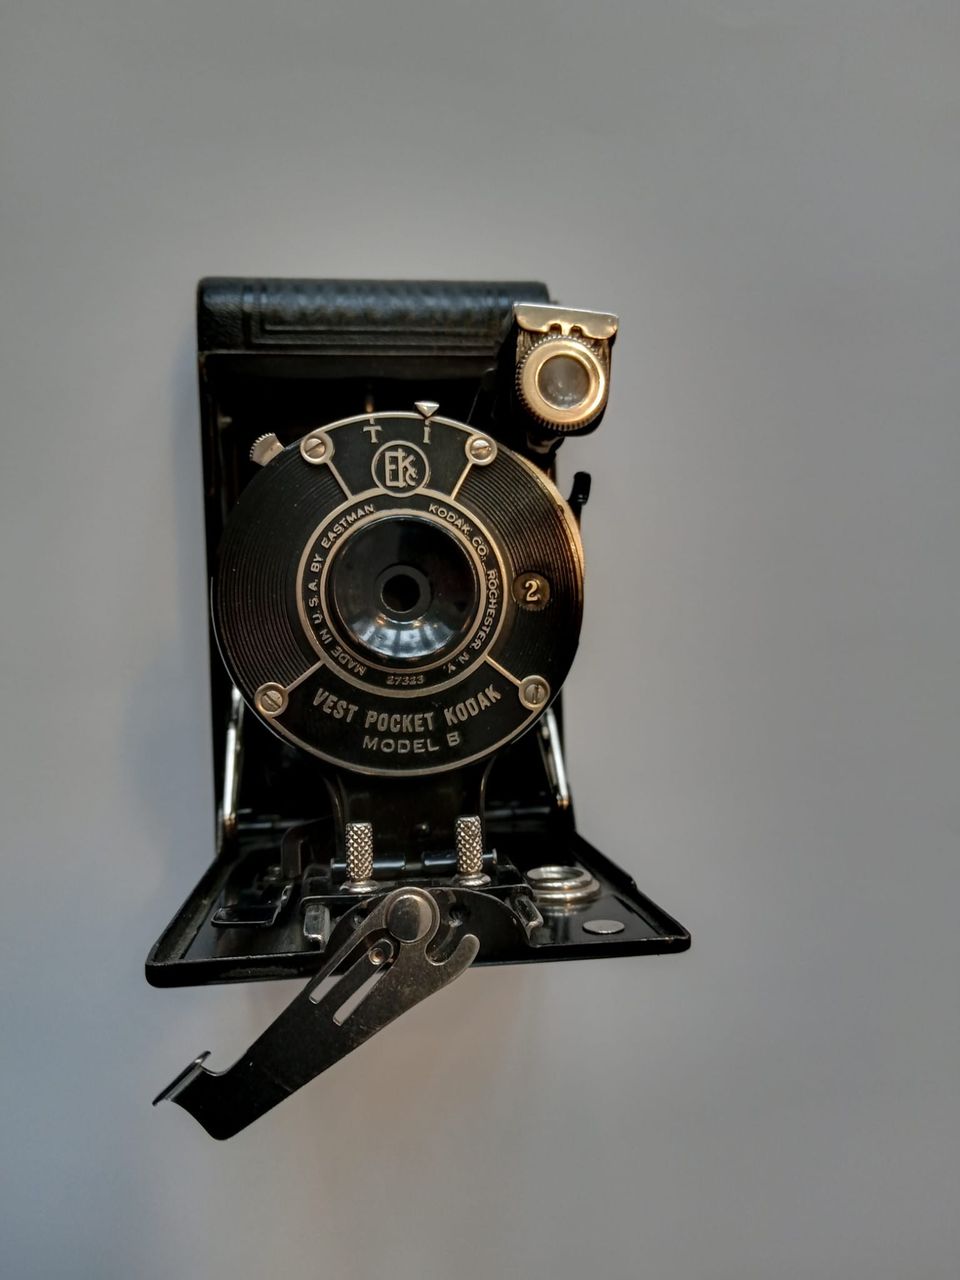 Vintage "Vest Pocket Kodak" Model B kamera